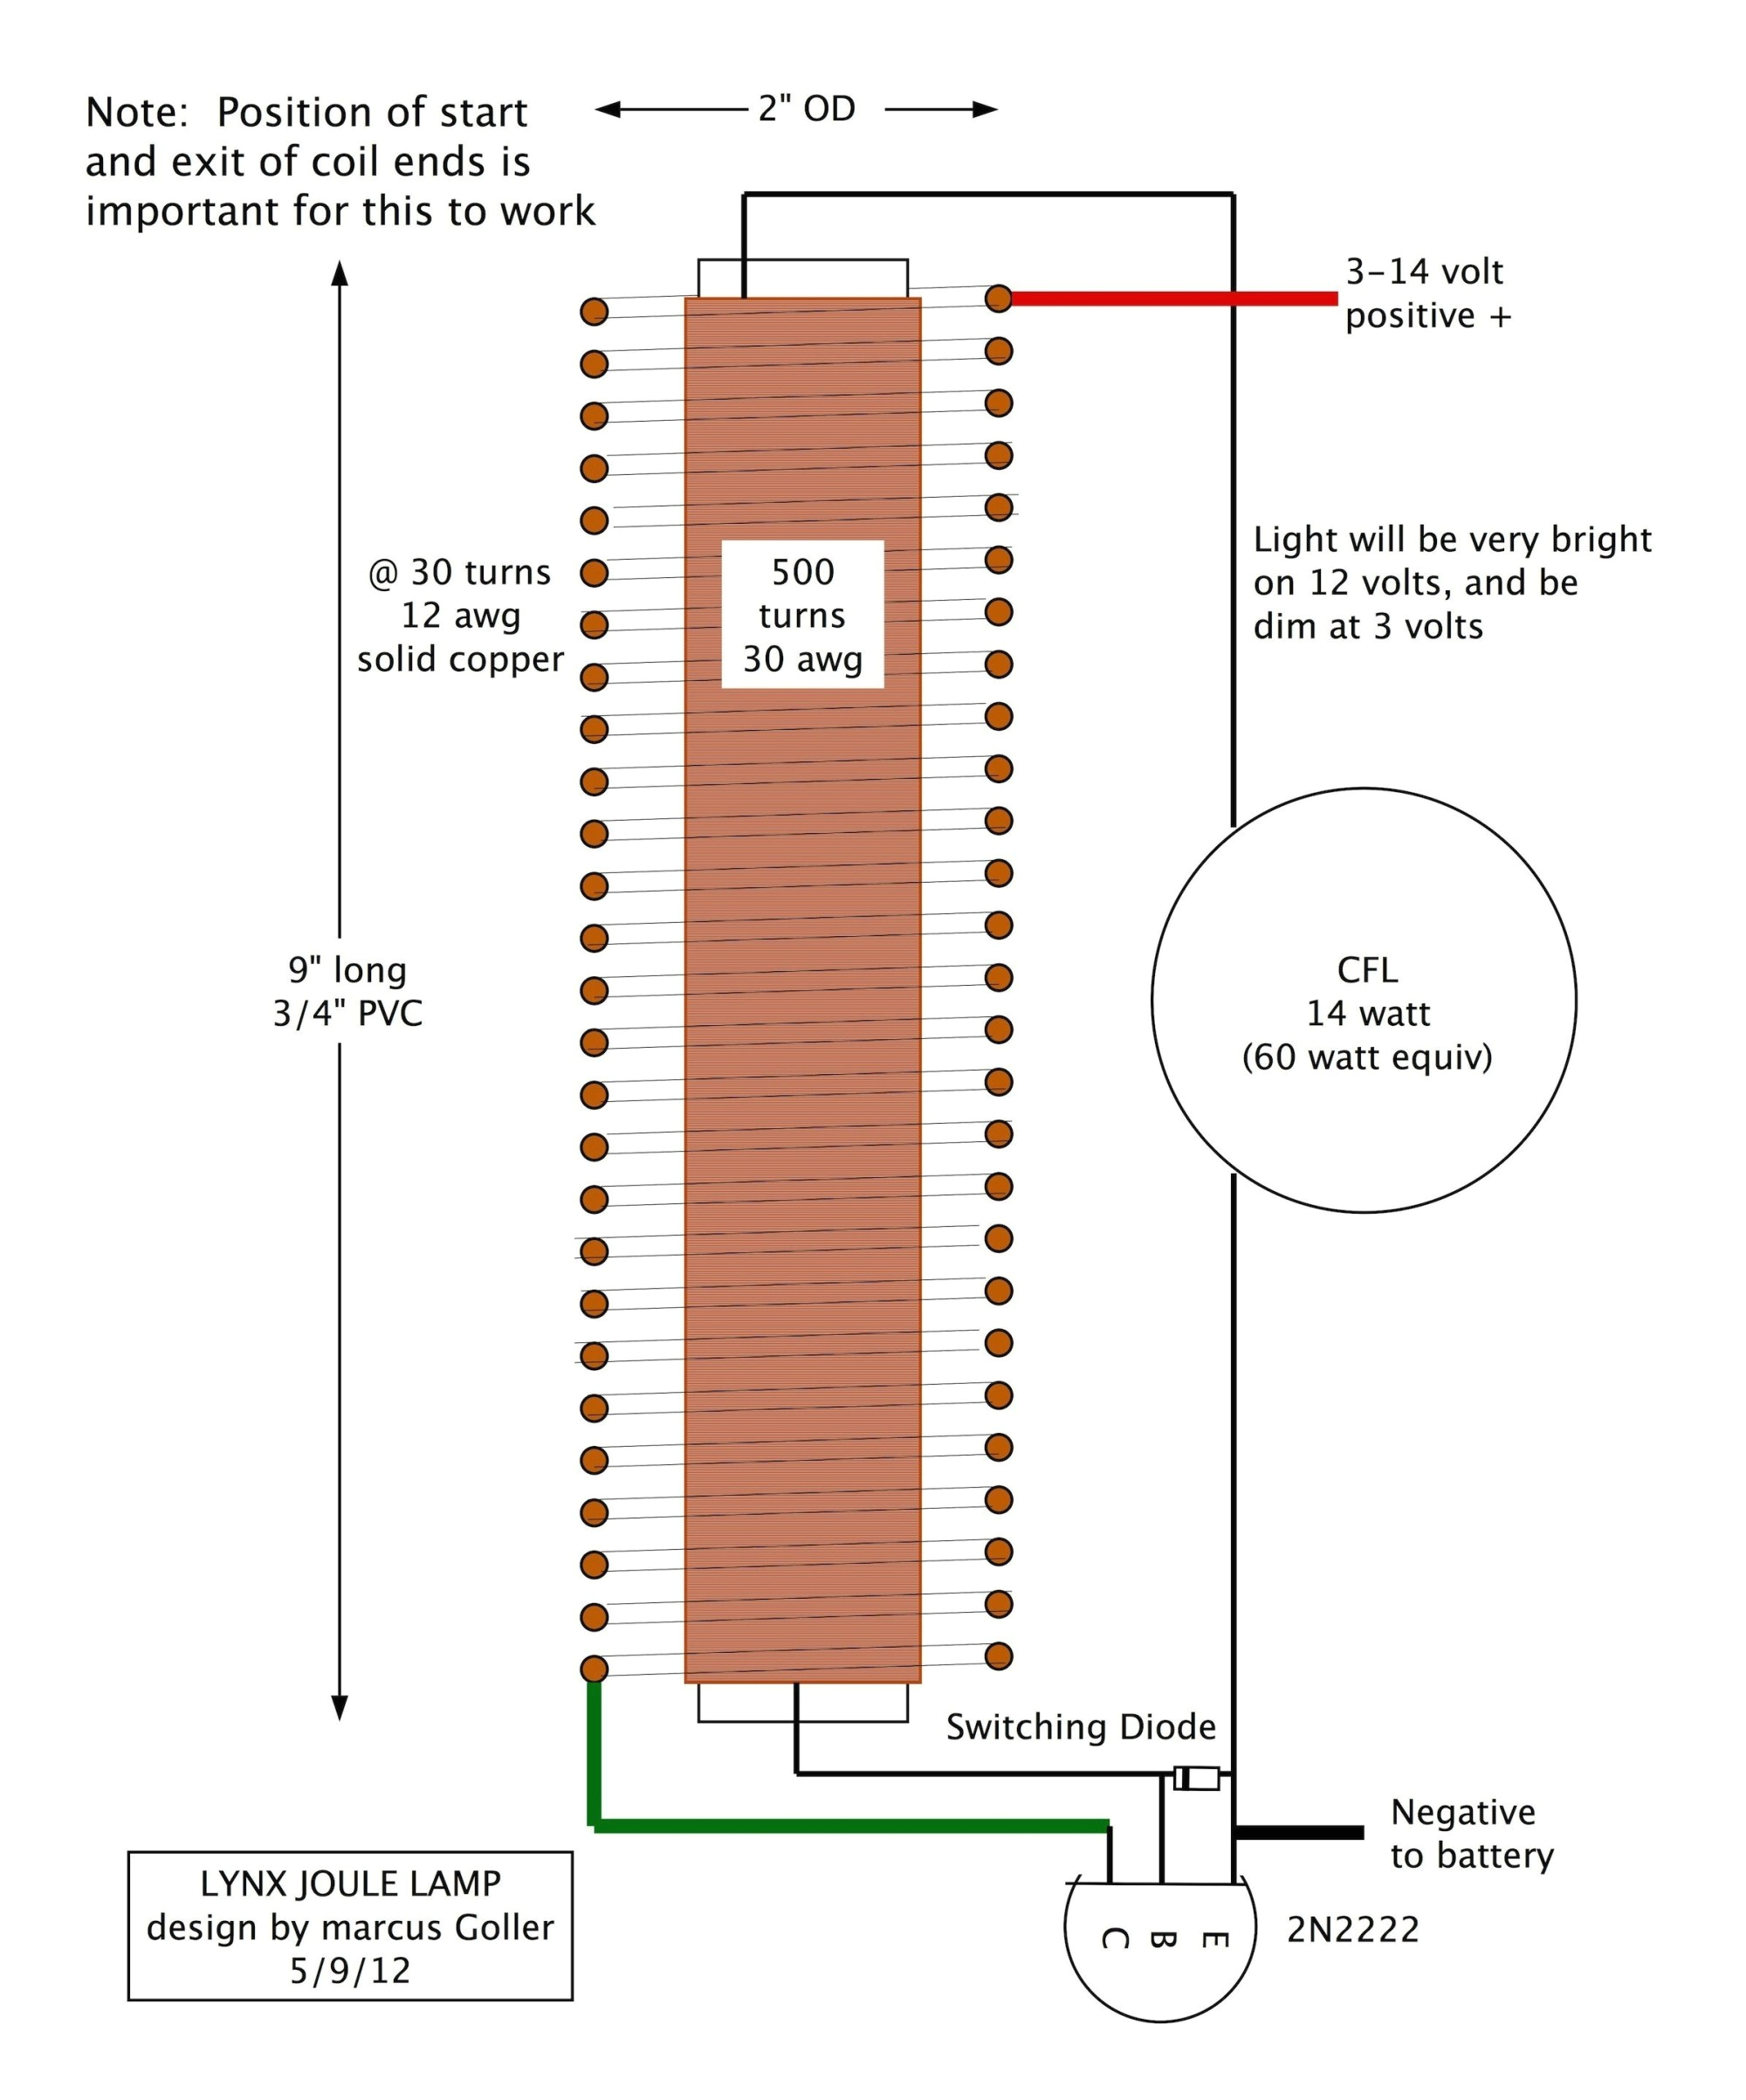 lithonia emergency light wiring diagram wiring diagram emergency lighting inspirationa wiring diagram for emergency lighting inspirationa battery diagram 18a jpg